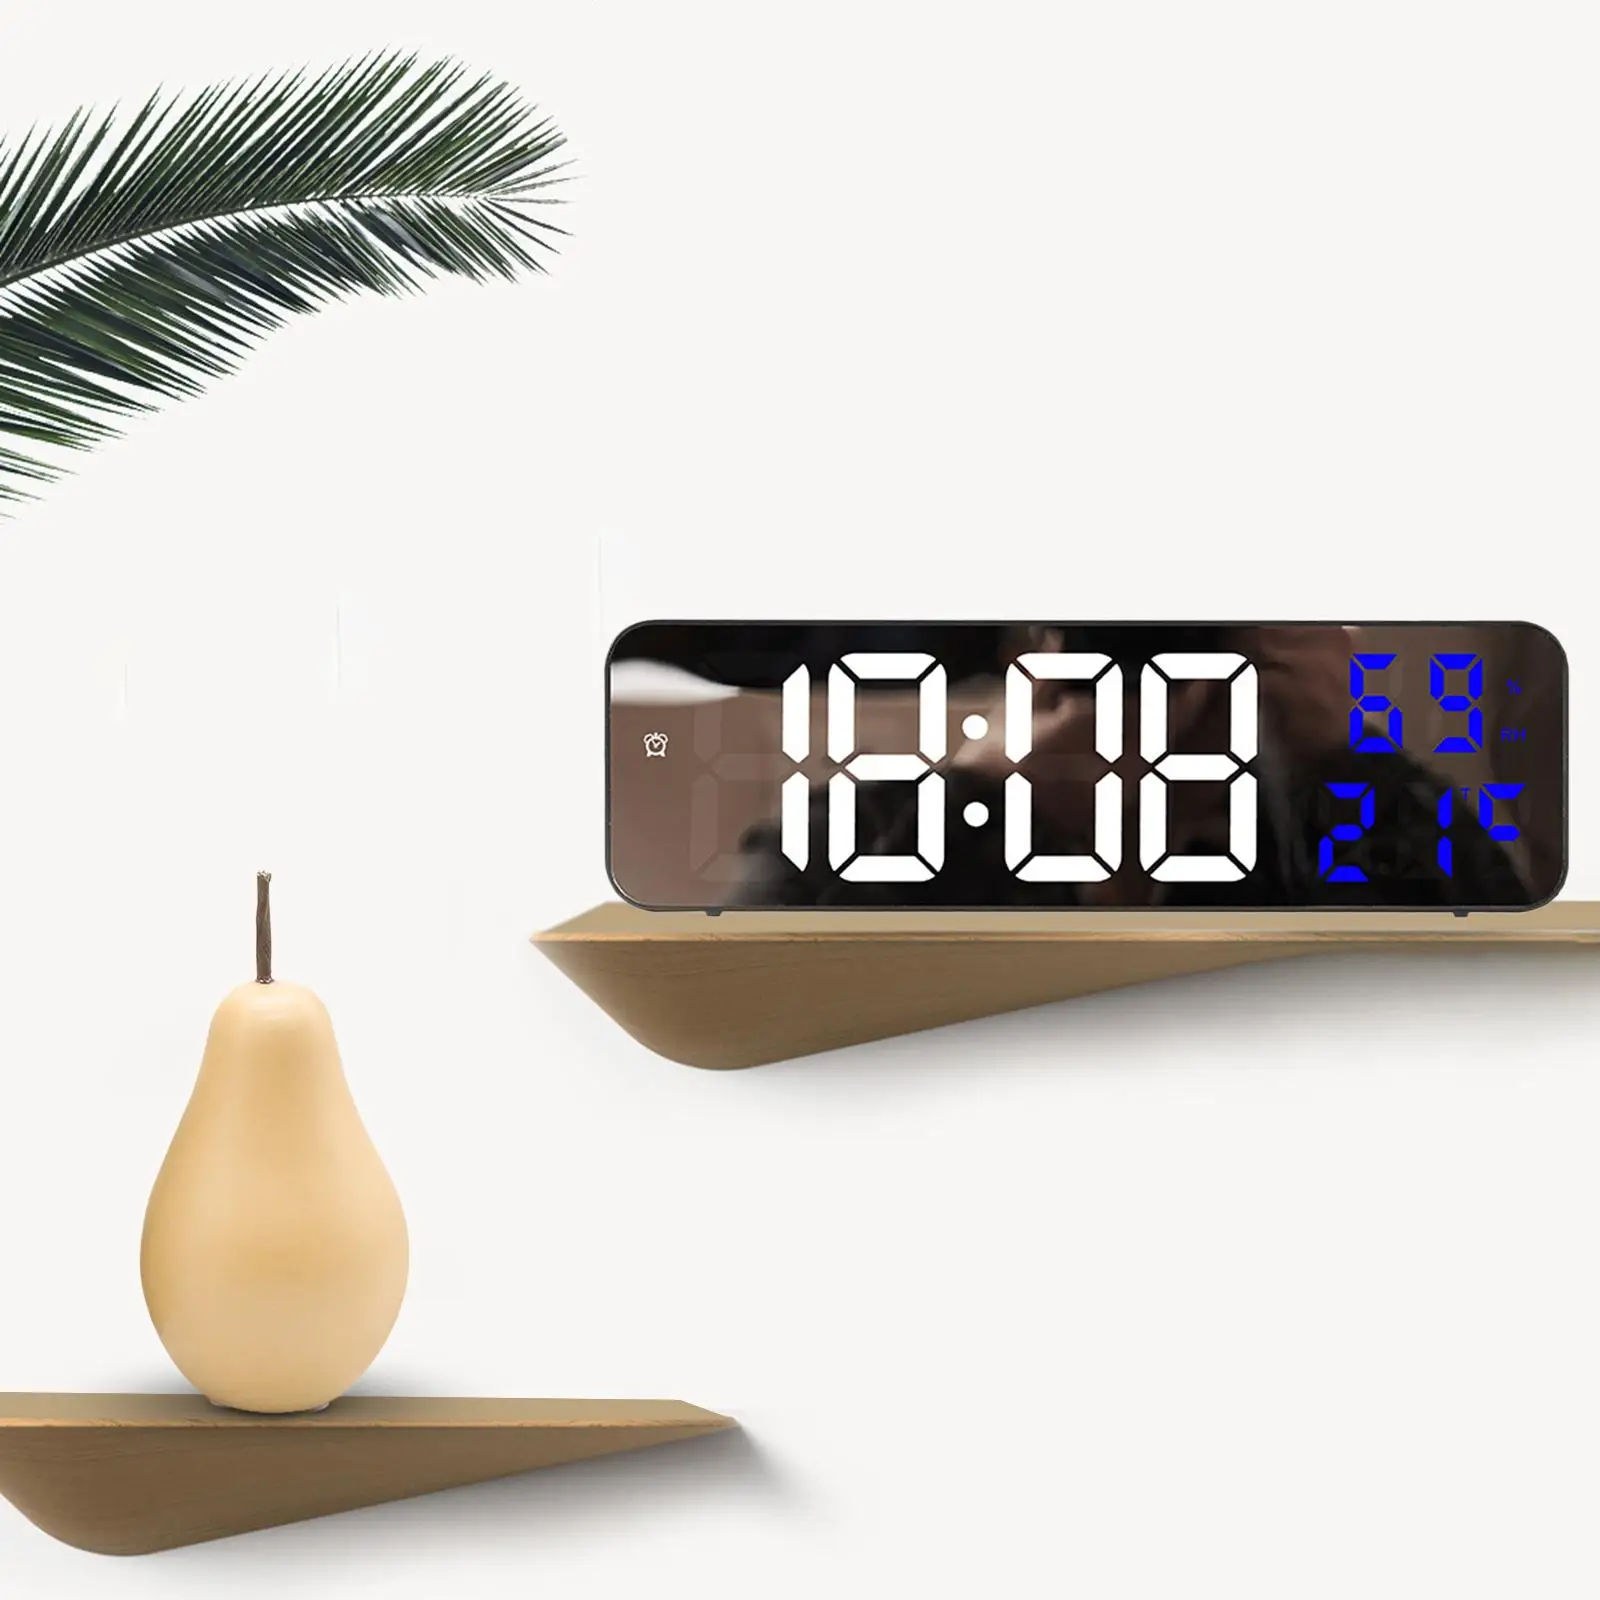 LED Alarm Clock LED Display Temperature Meter Hygrometer 12/24H Wall Mounted Digital Desktop Clock Watch for Office Bedroom Home